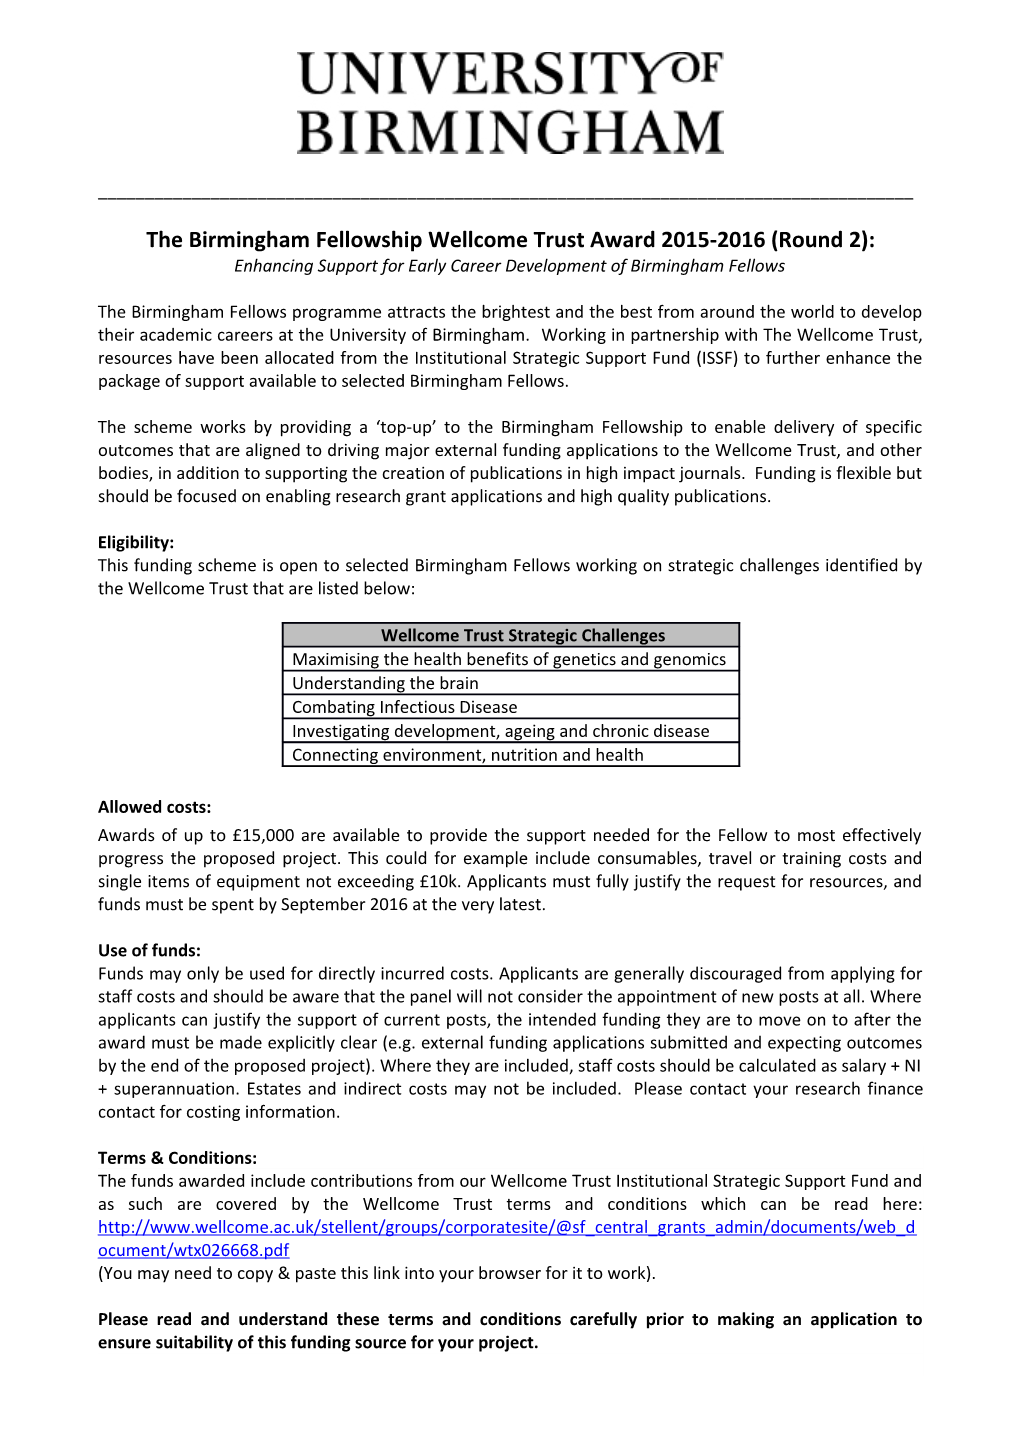 The Birmingham Fellowship Wellcome Trust Award 2015-2016 (Round 2)